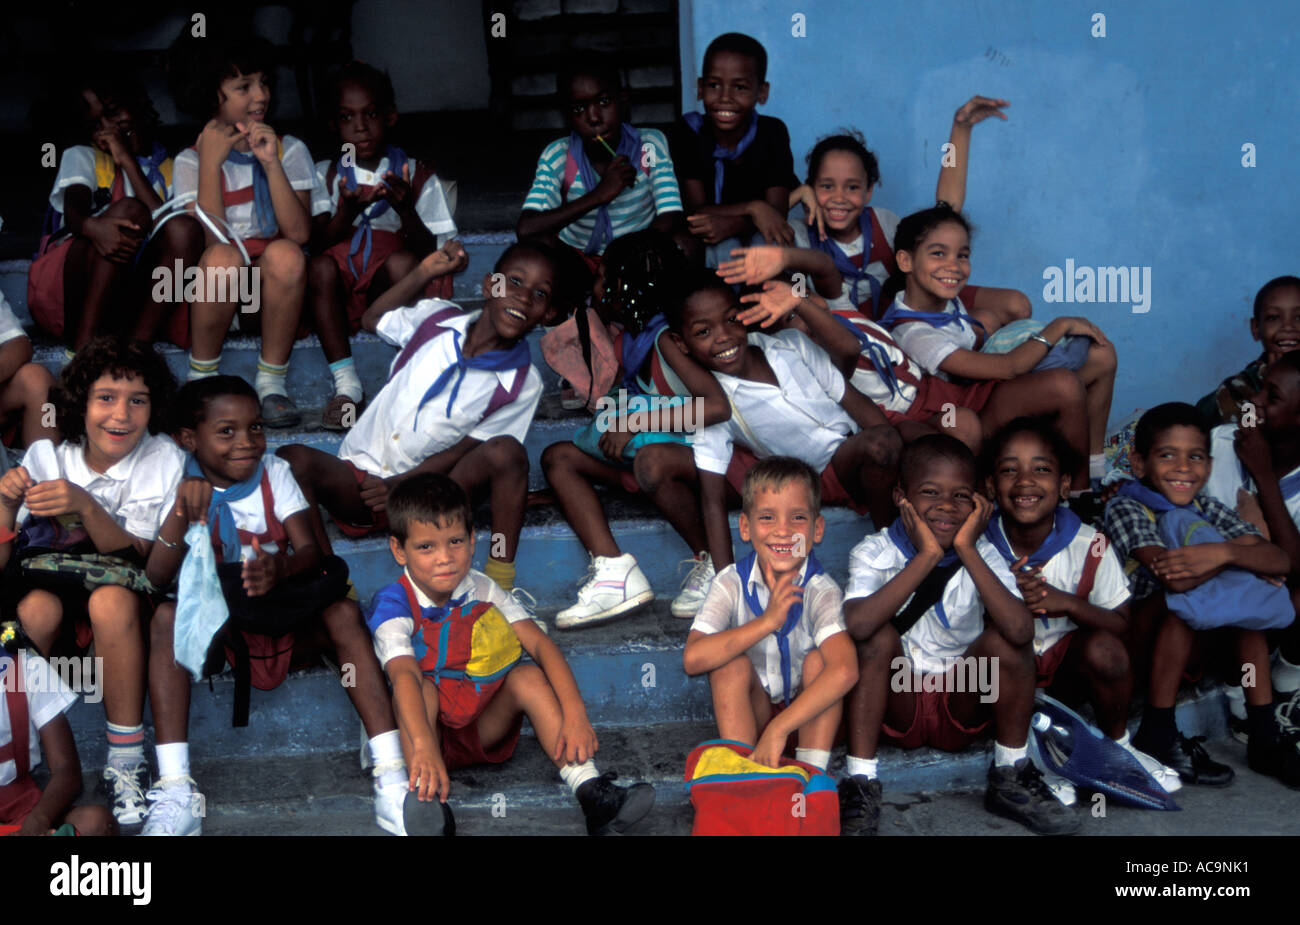 Whooping Cuban school children seated on steps, Matanzas, Cuba Stock Photo